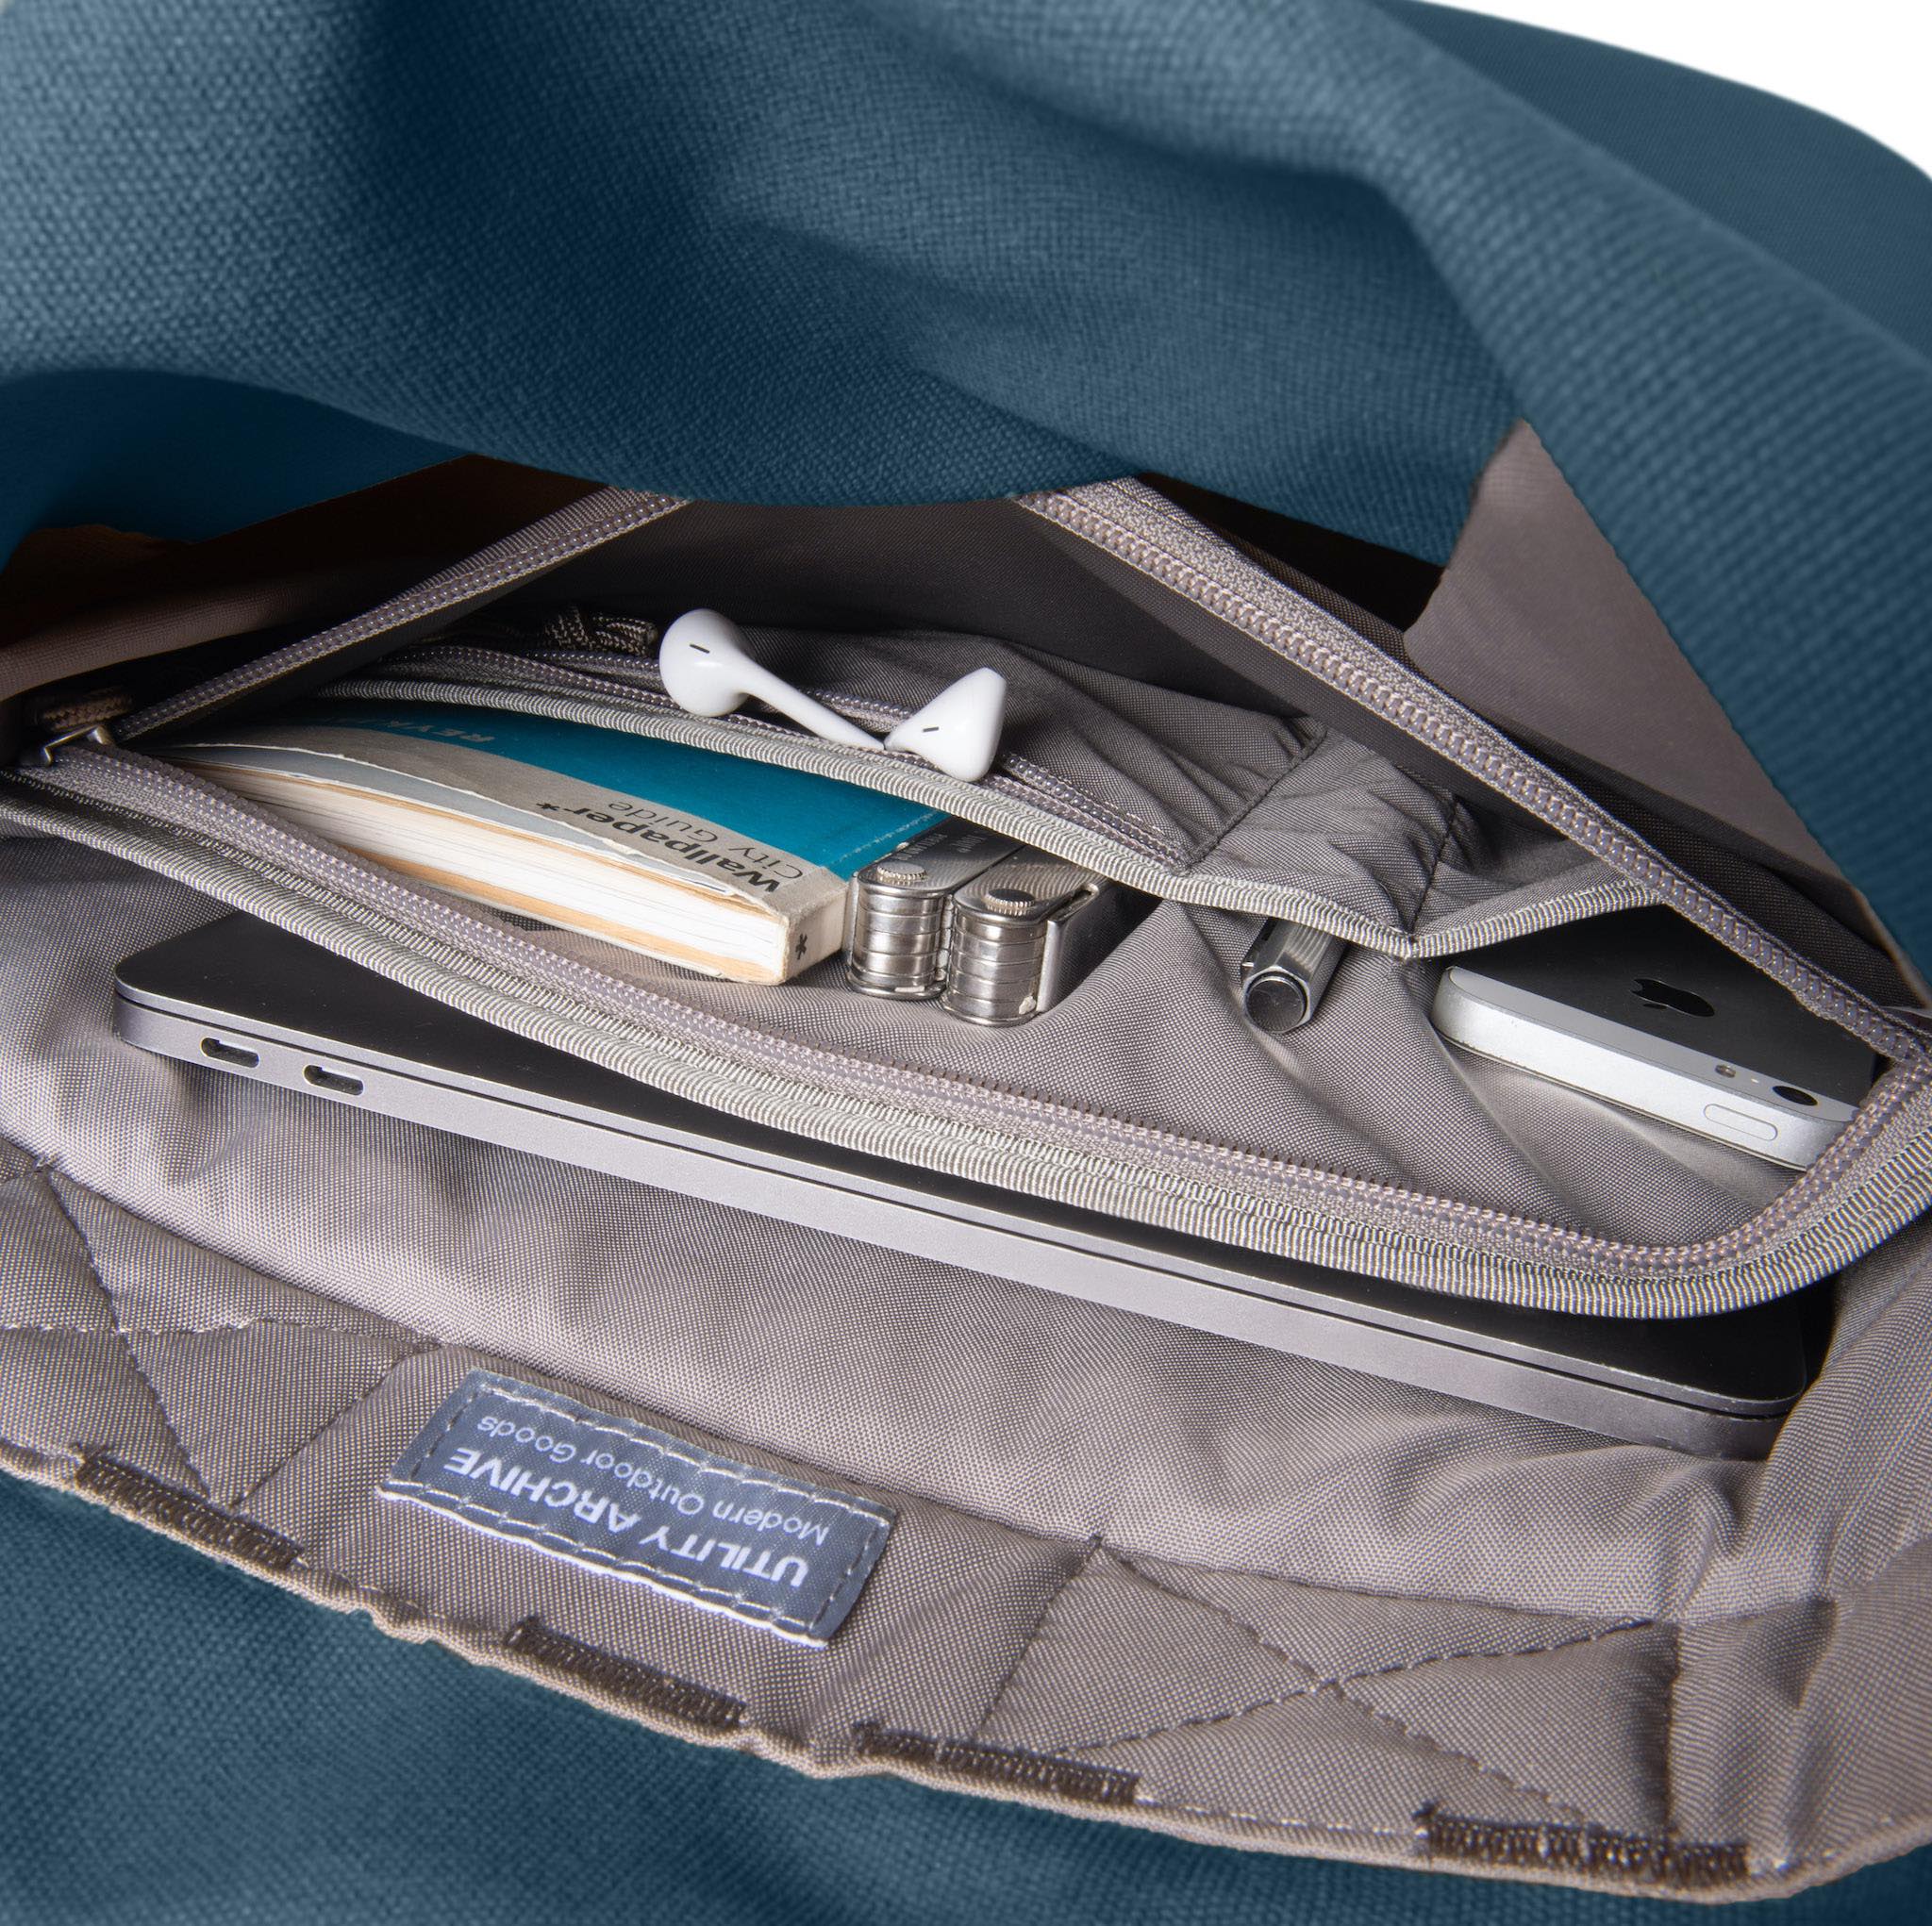 Blue backpack interior organiser pocket with guidebook and earphones.